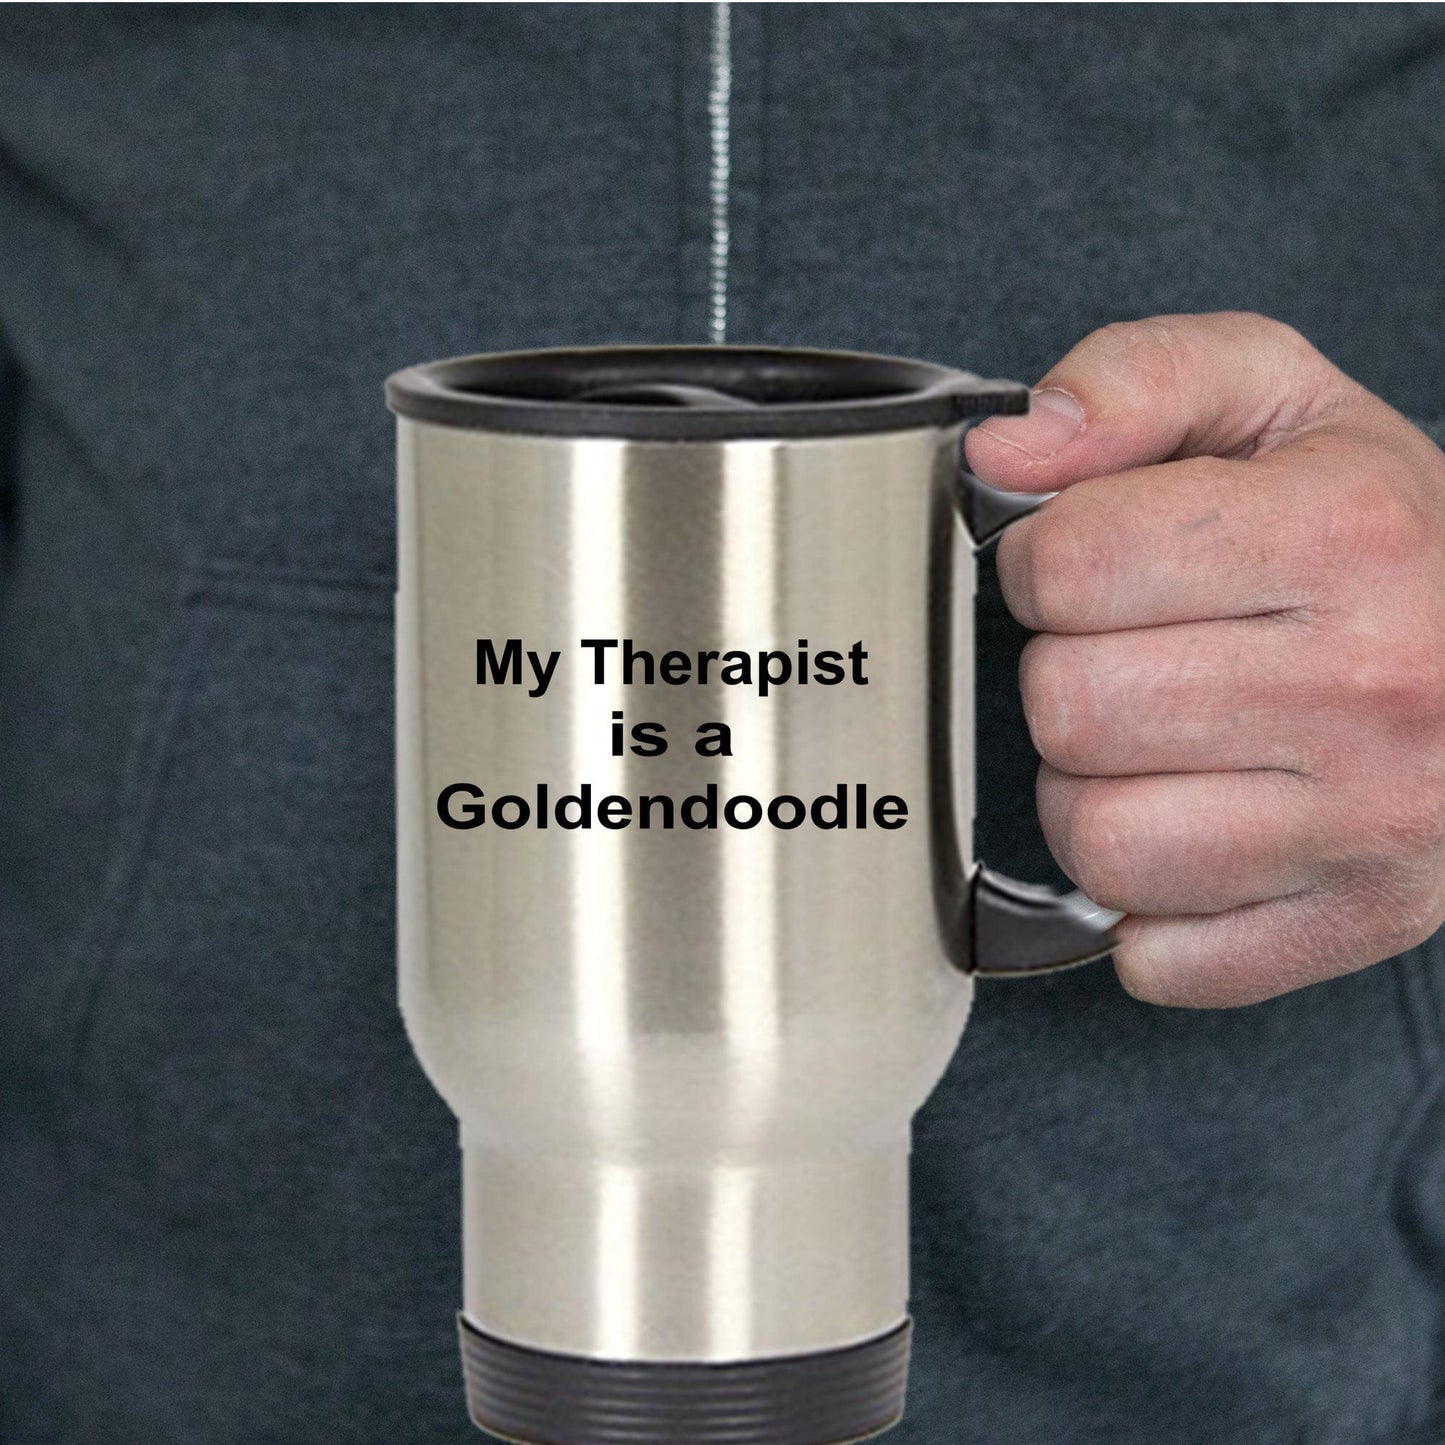 Goldendoodle Dog Therapist Travel Coffee Mug